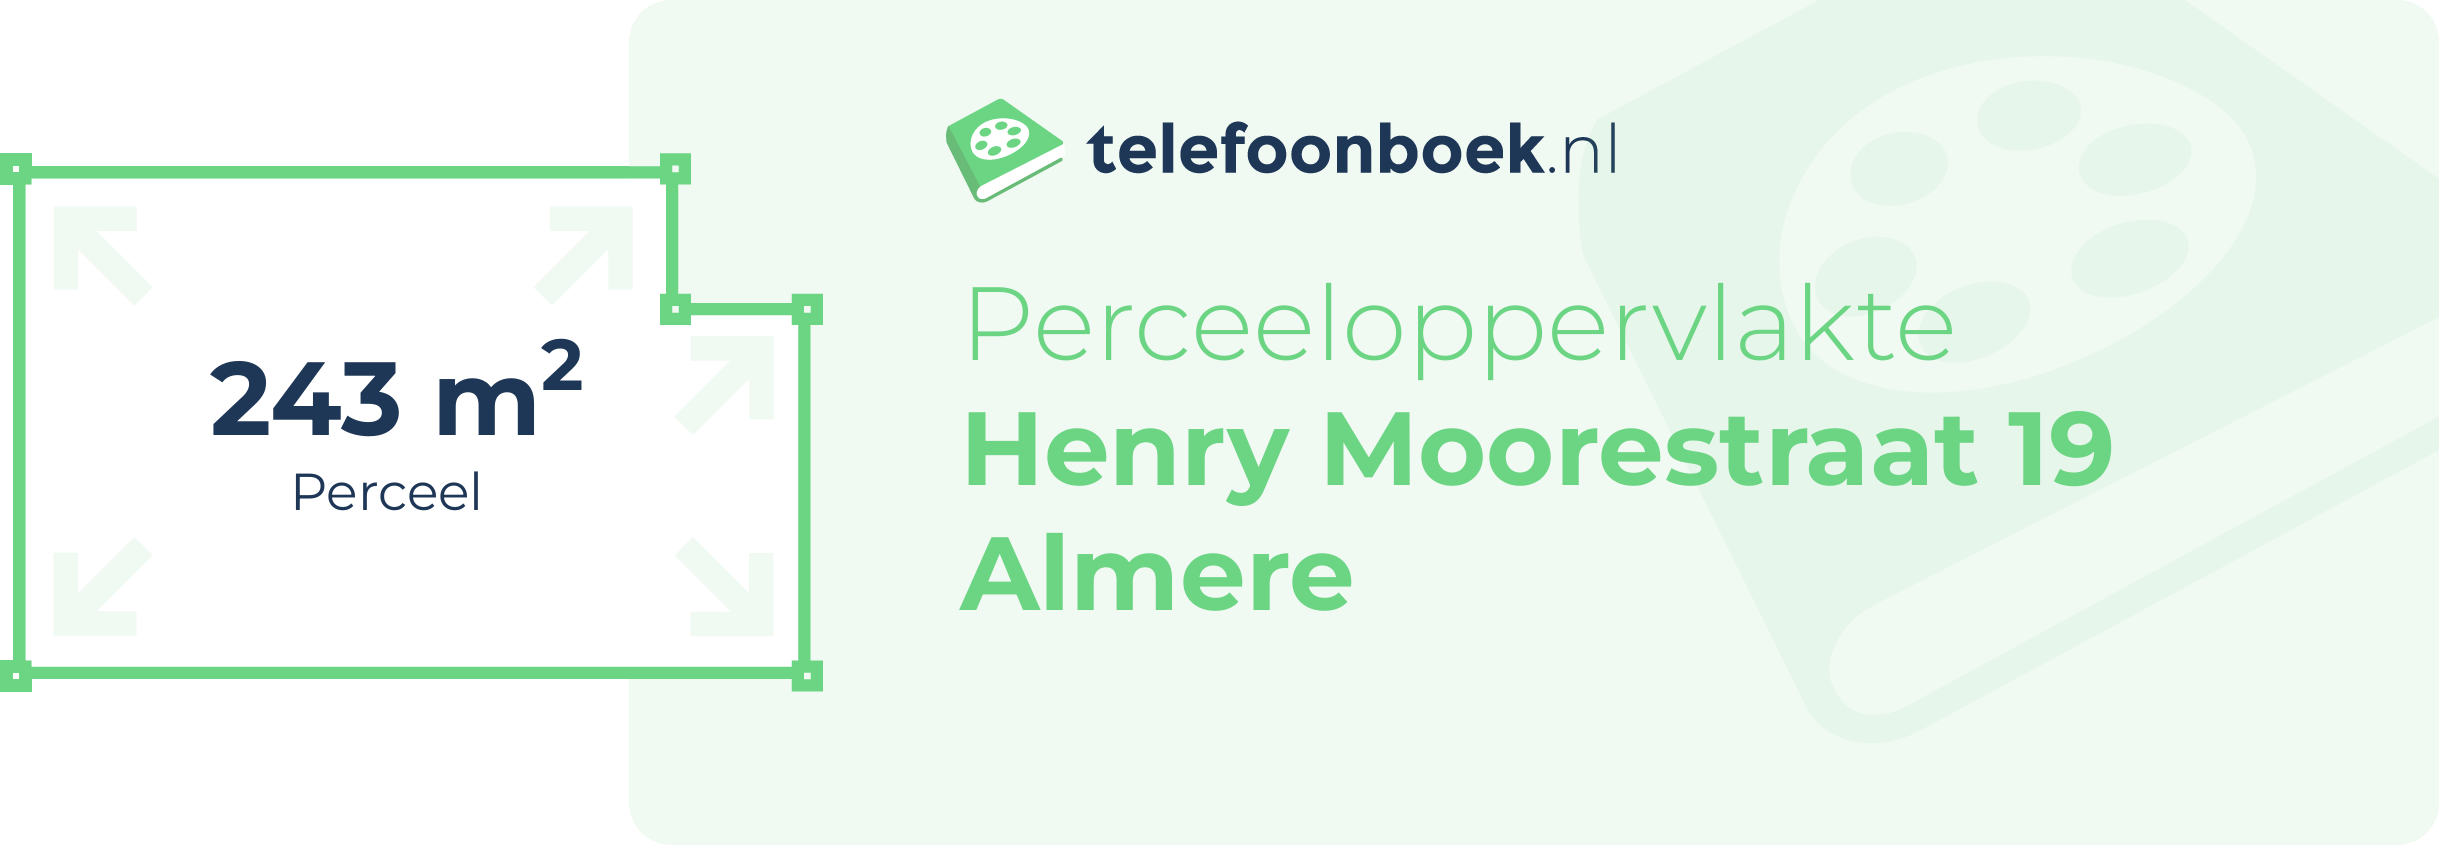 Perceeloppervlakte Henry Moorestraat 19 Almere